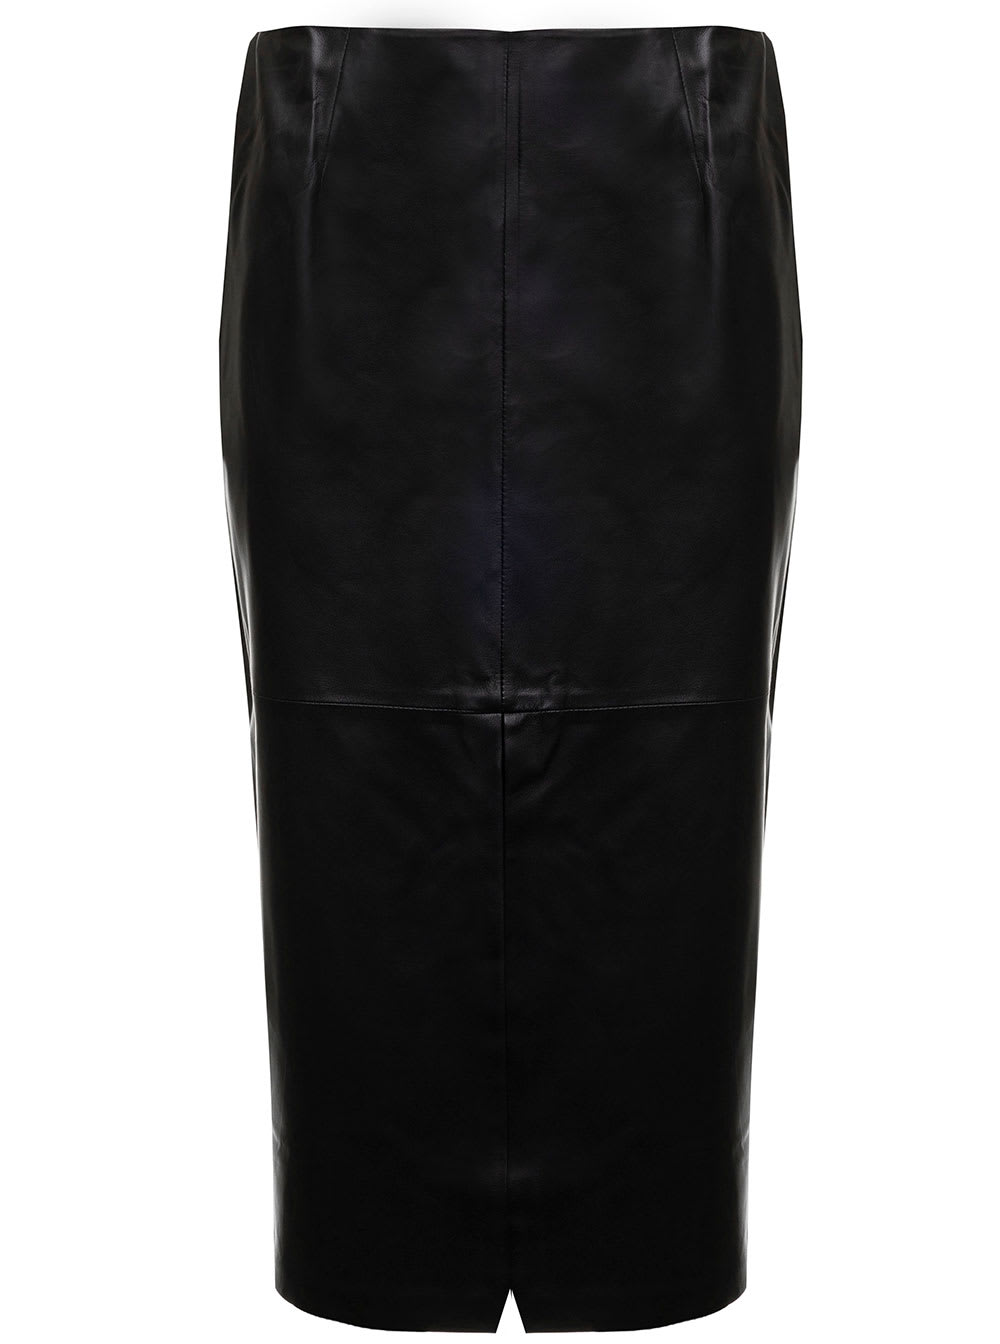 Selenia Black Leather Long Skirt Arma Woman